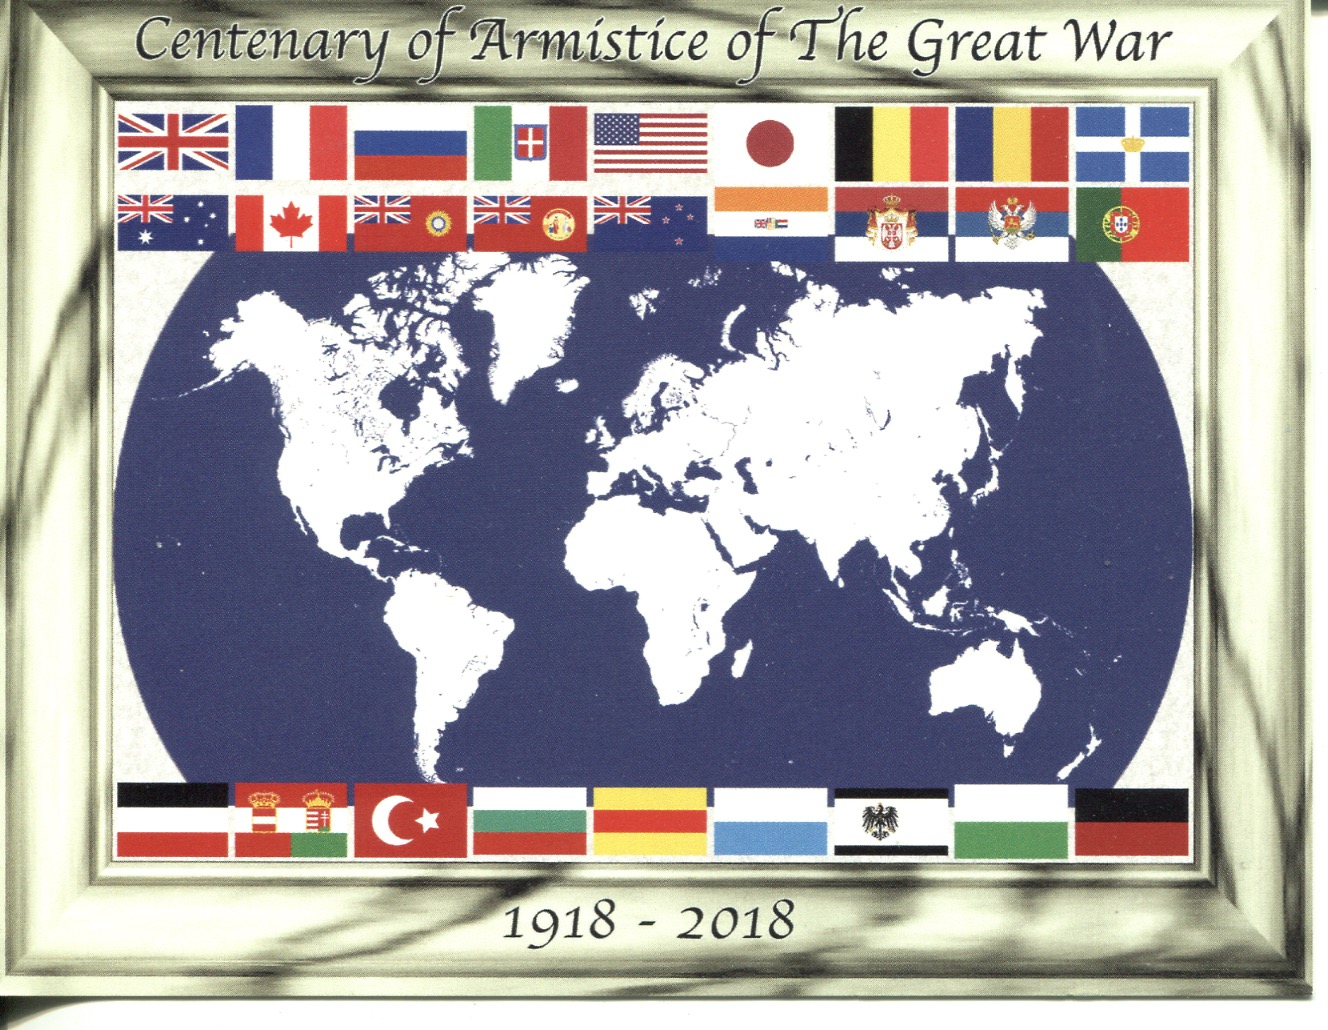 Centenary of Armistice of the Great War (WWI)